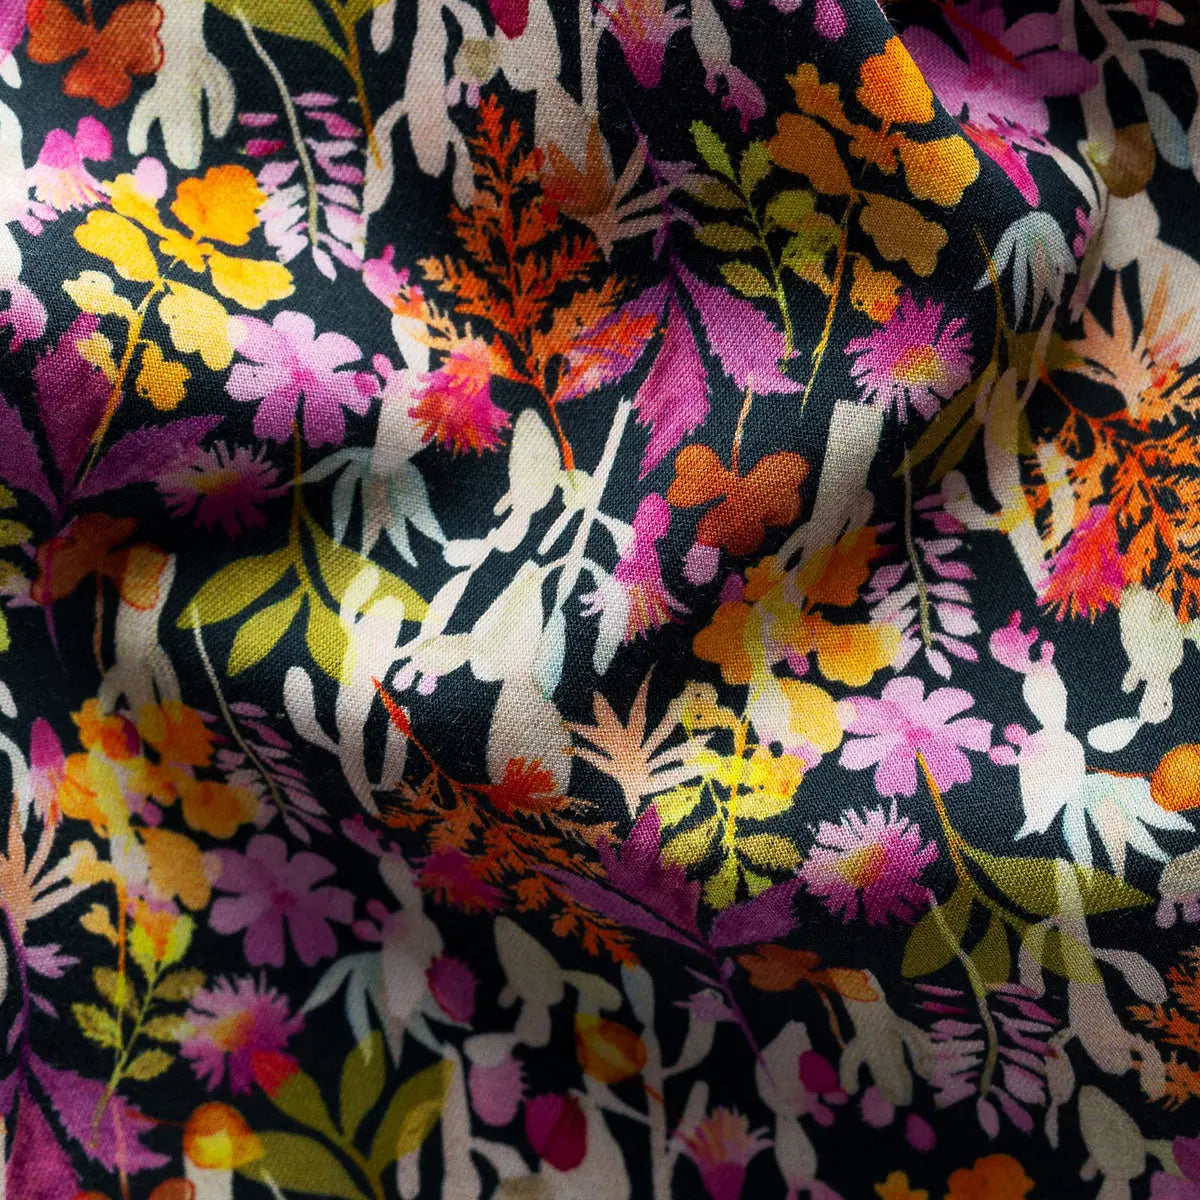 Multi Colour Floral Print Slim Fit Shirt  Eton   